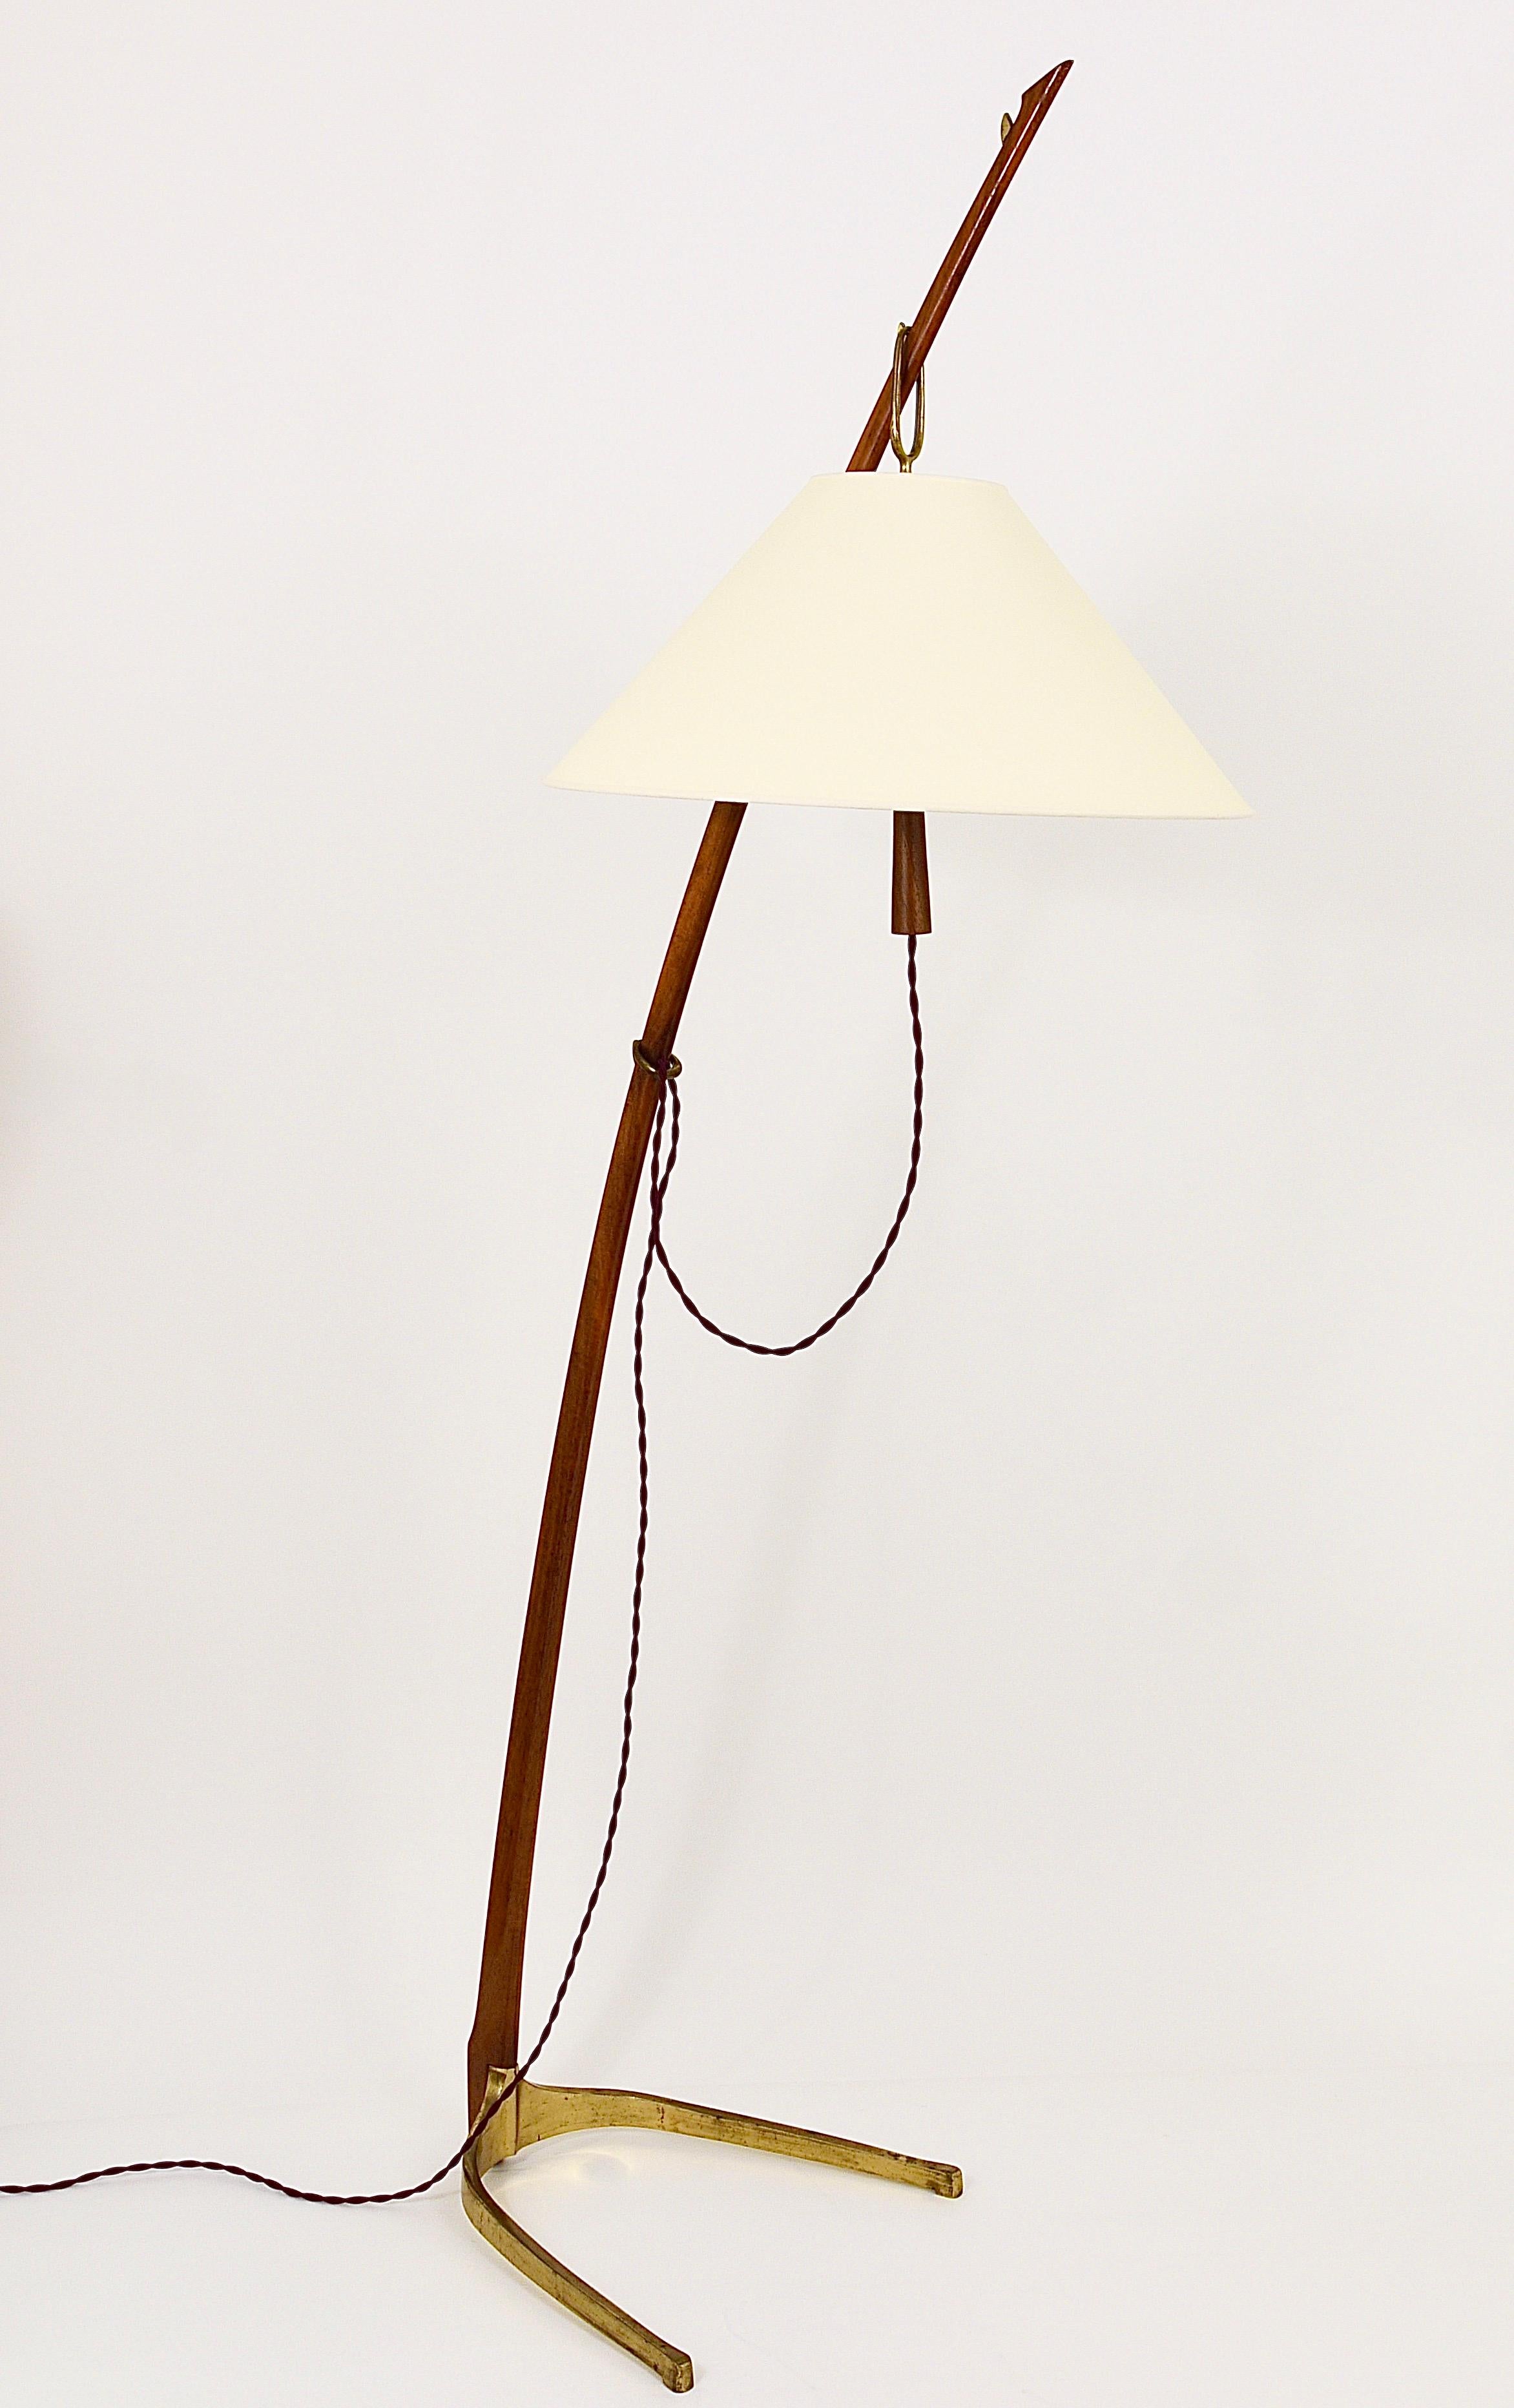 J.T. Kalmar 2x Dornstab Adjustable Floor Lamp, Brass, Walnut, Austria, 1950s For Sale 1